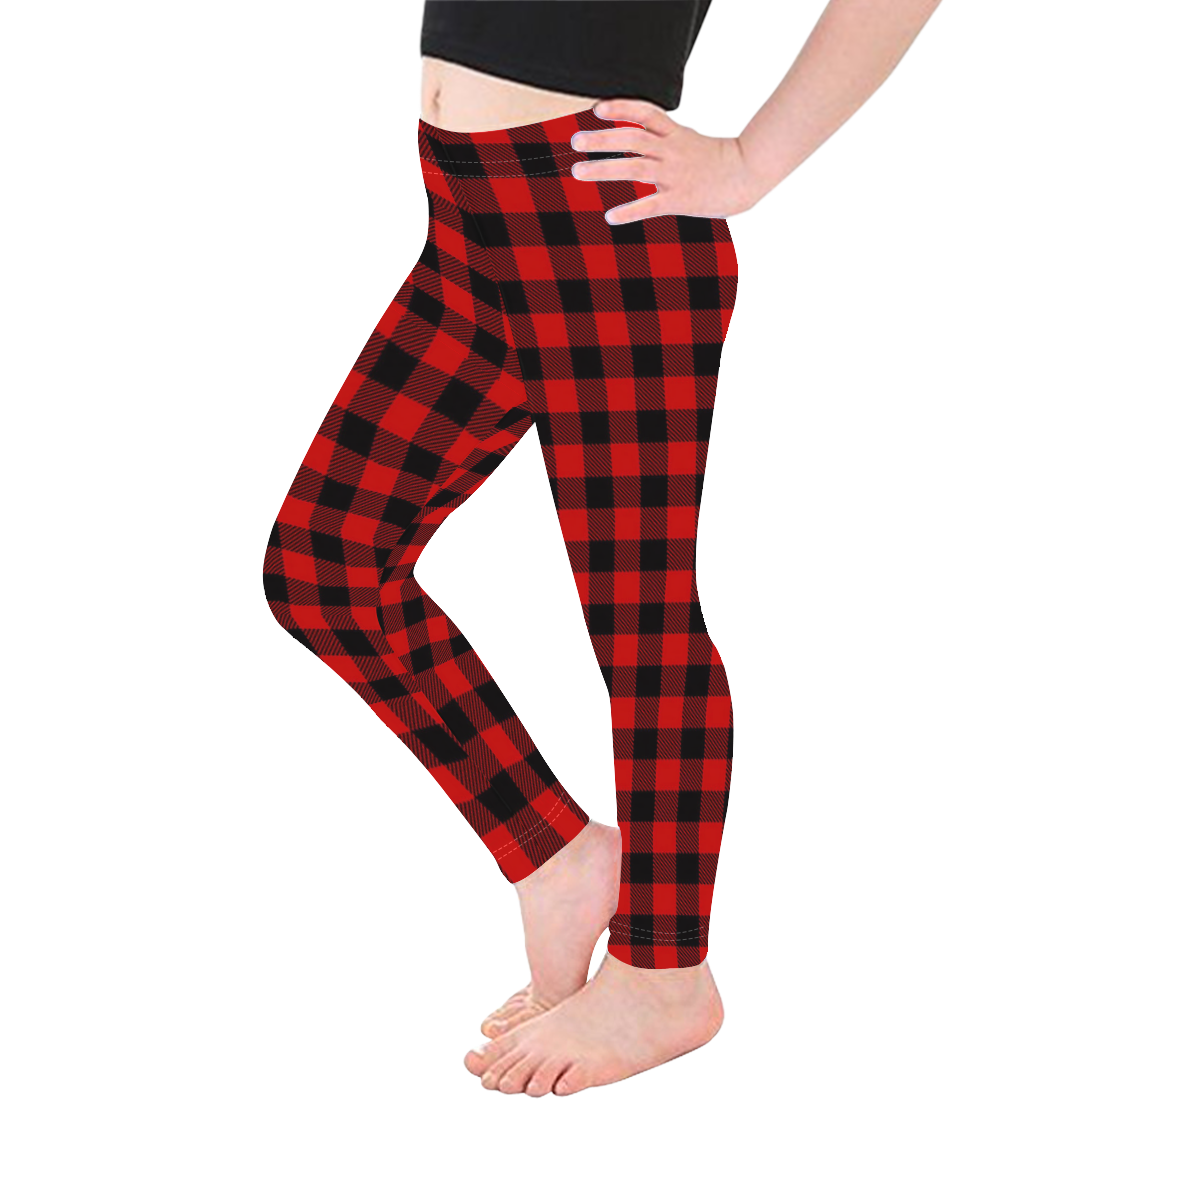 LUMBERJACK Squares Fabric - red black Kid's Ankle Length Leggings (Model L06)